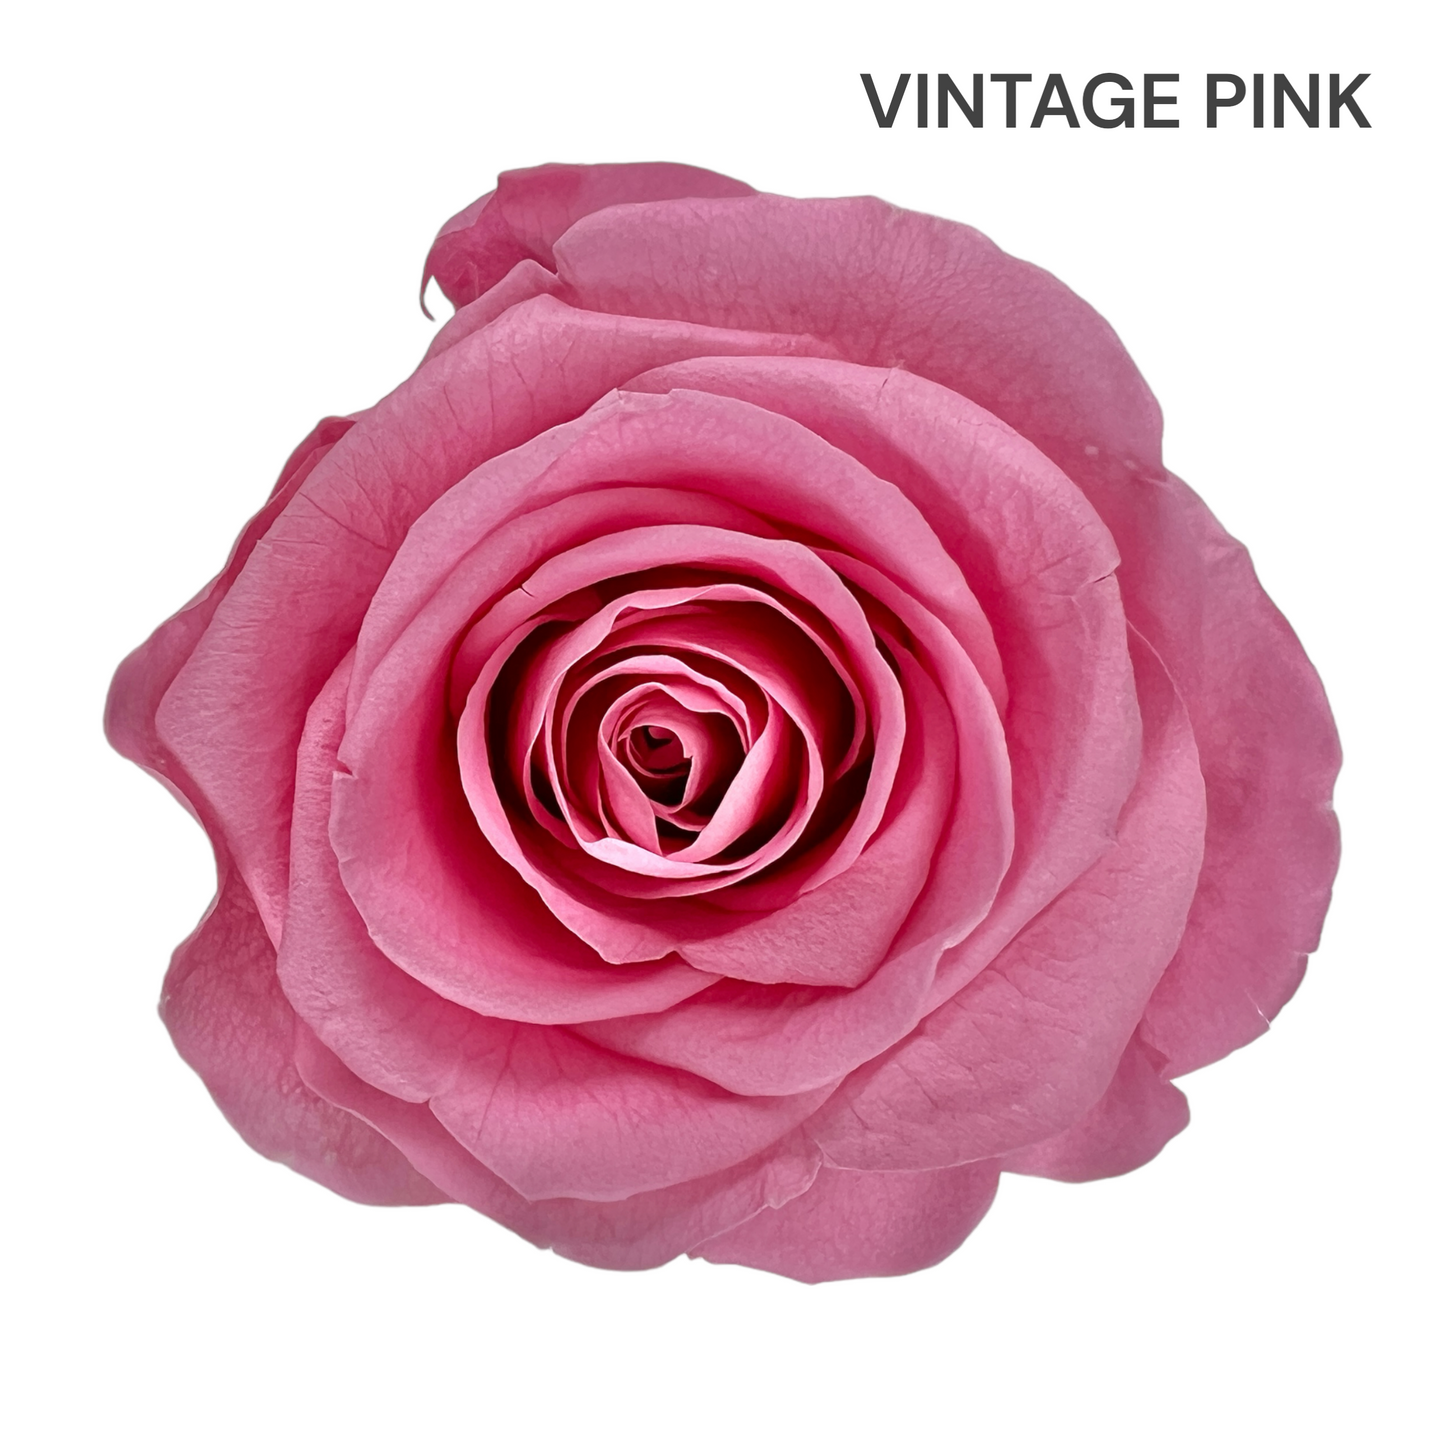 Velvet Square Rose Box Collection | 16